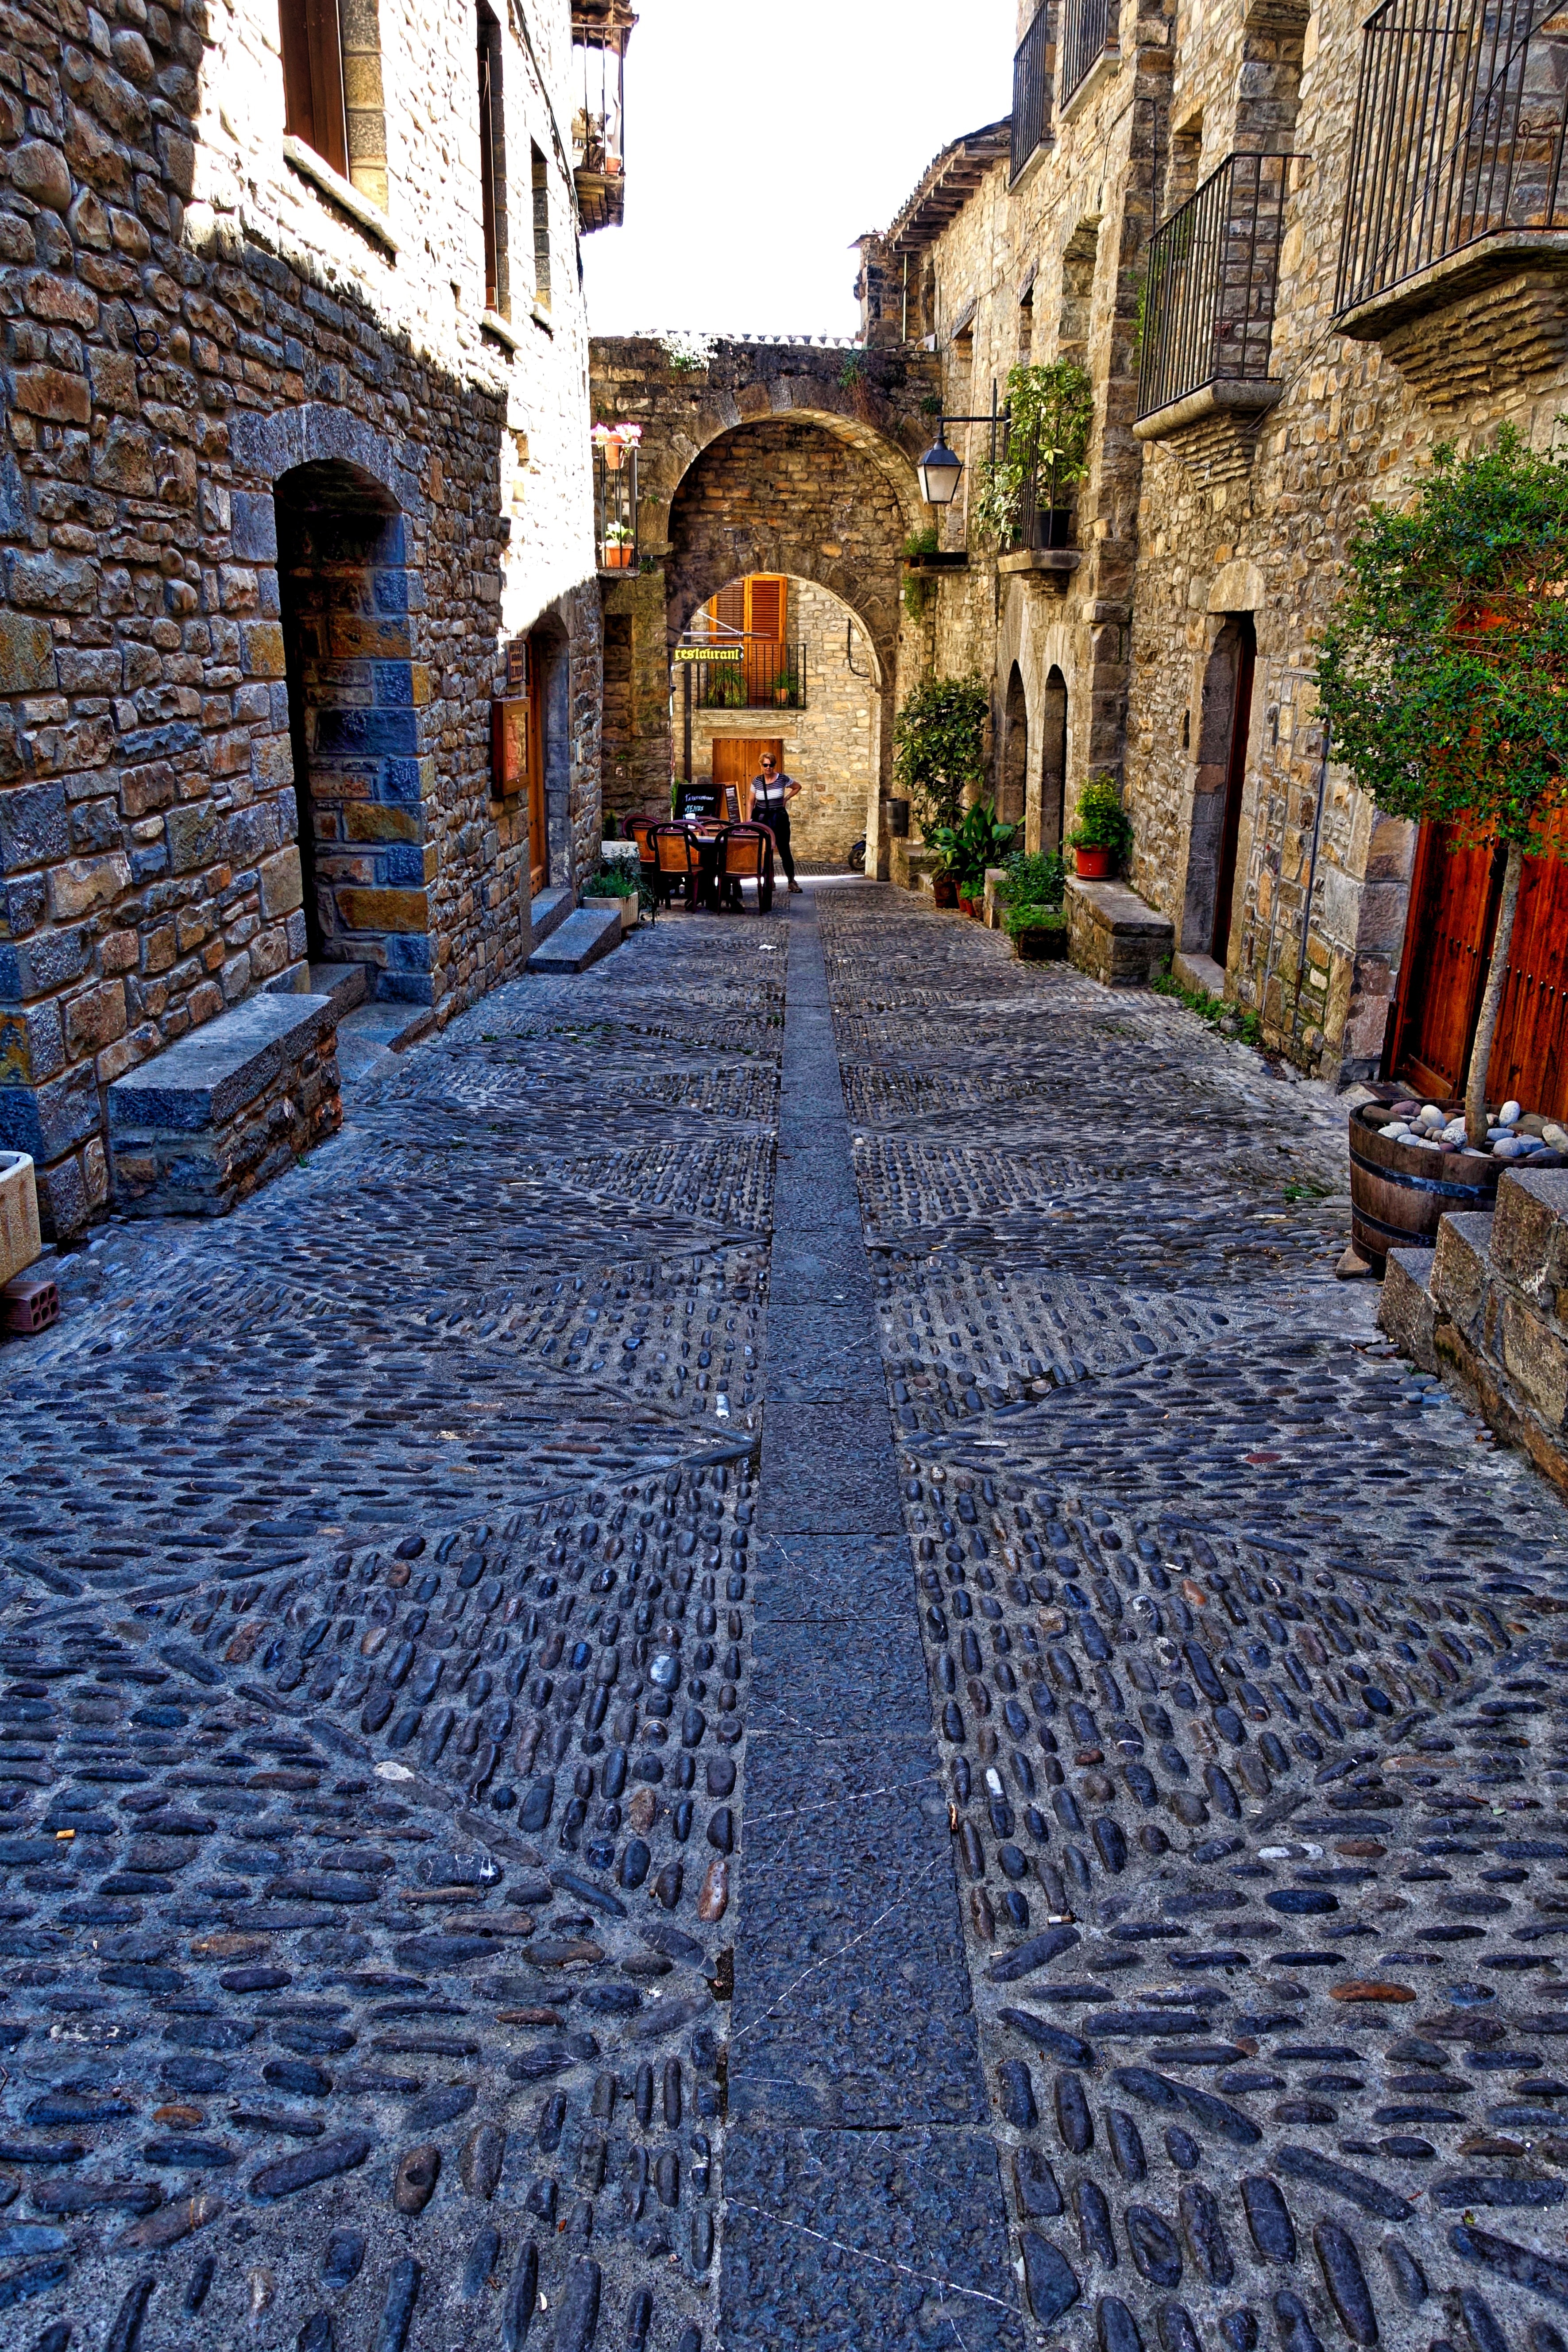 Free Images : street, texture, sidewalk, town, alley, cobblestone ...